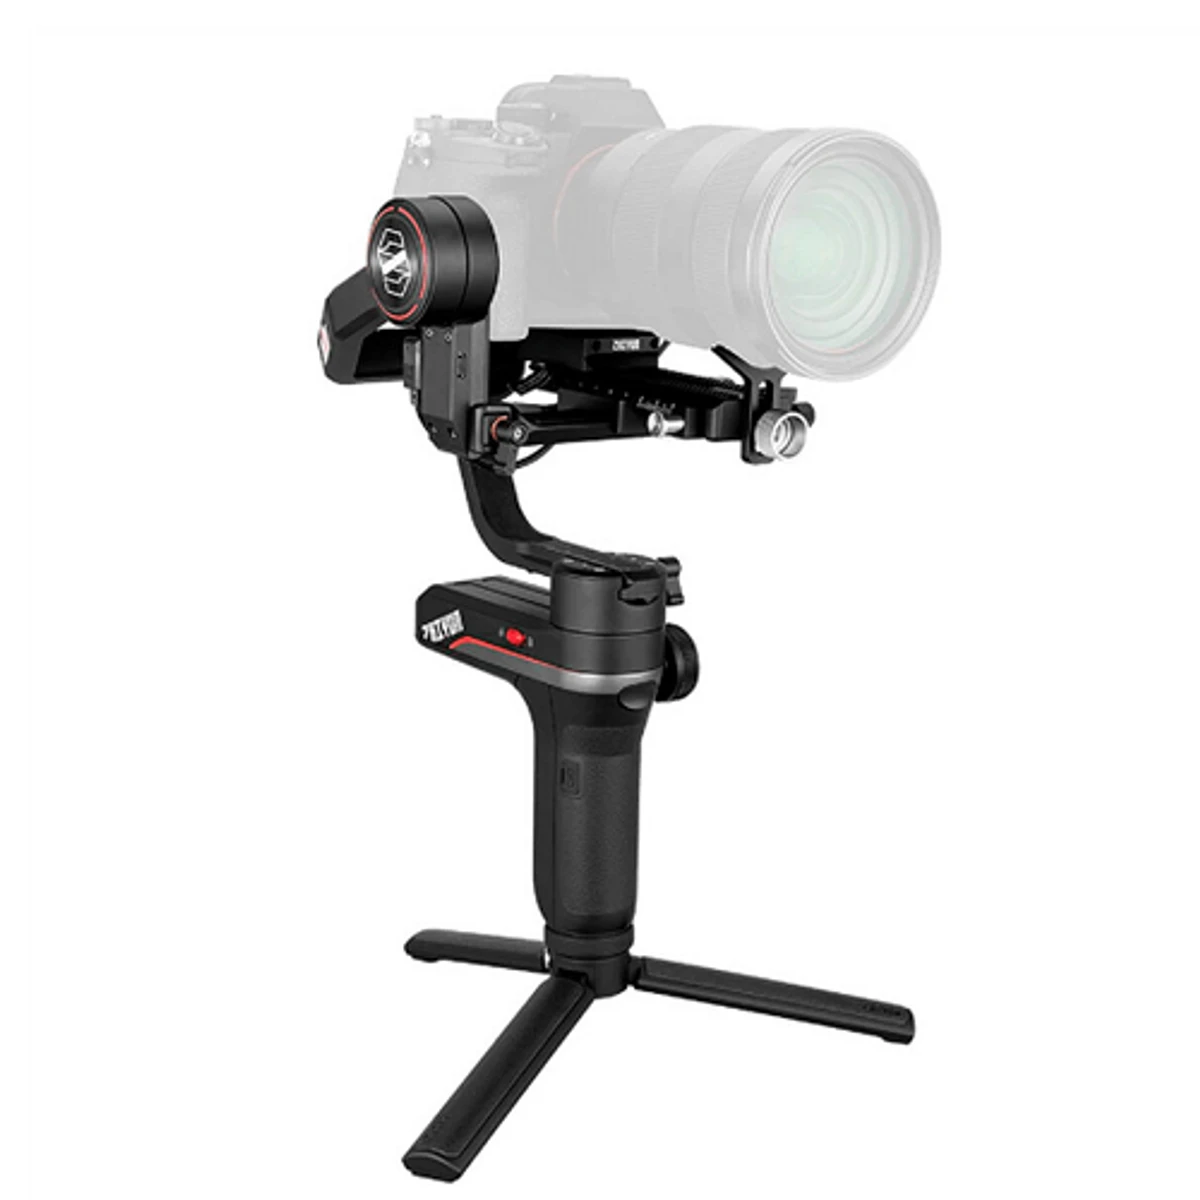 Zhiyun Weebill S 3-Axis Gimbal Stabilizer For DSLR & Mirrorless Camera